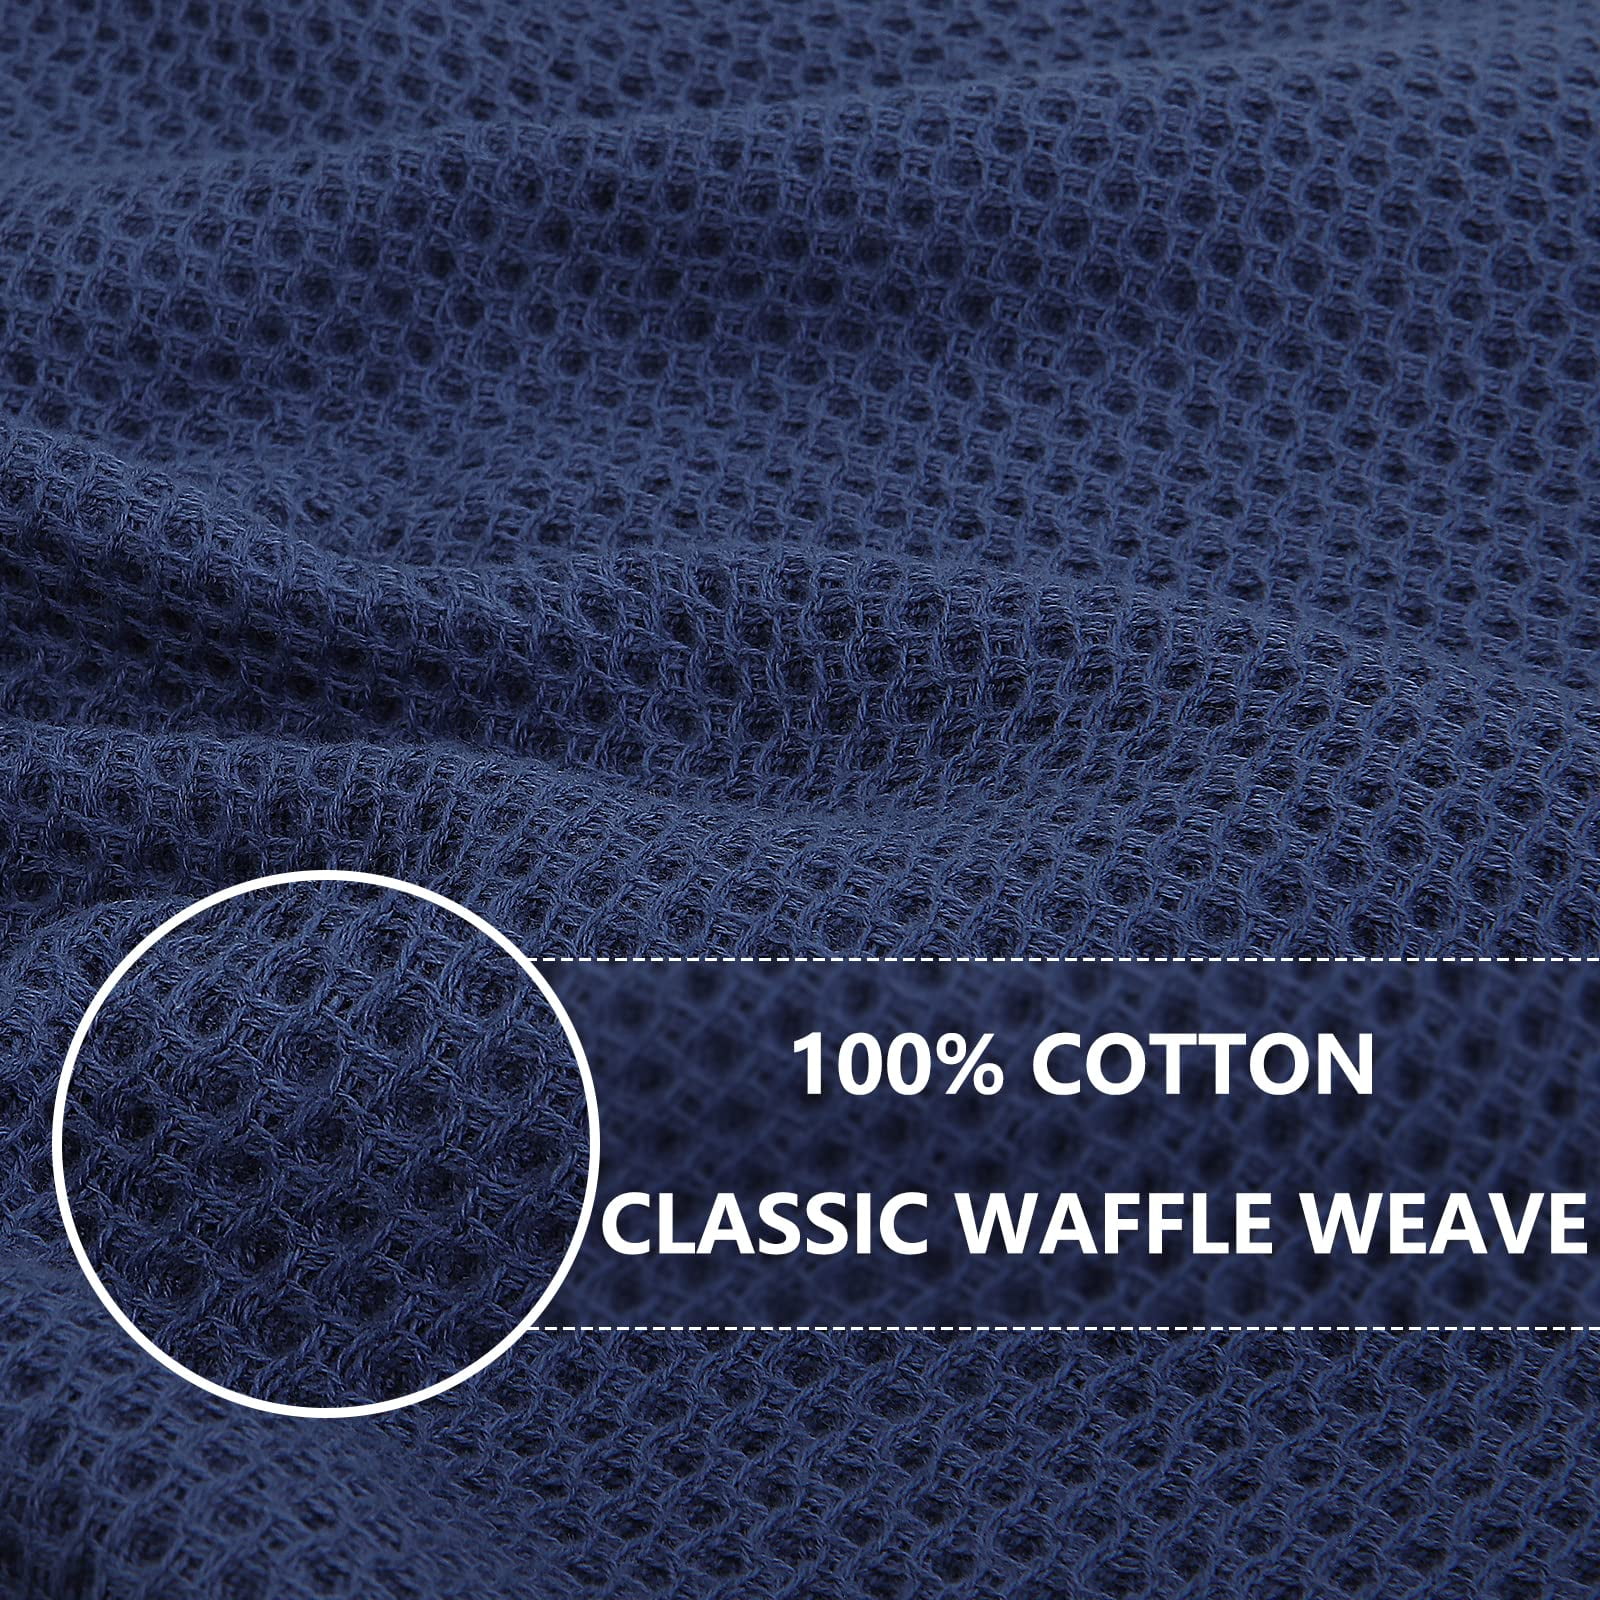 13×13 Waffle Weave Dish Cloth - Turquoise